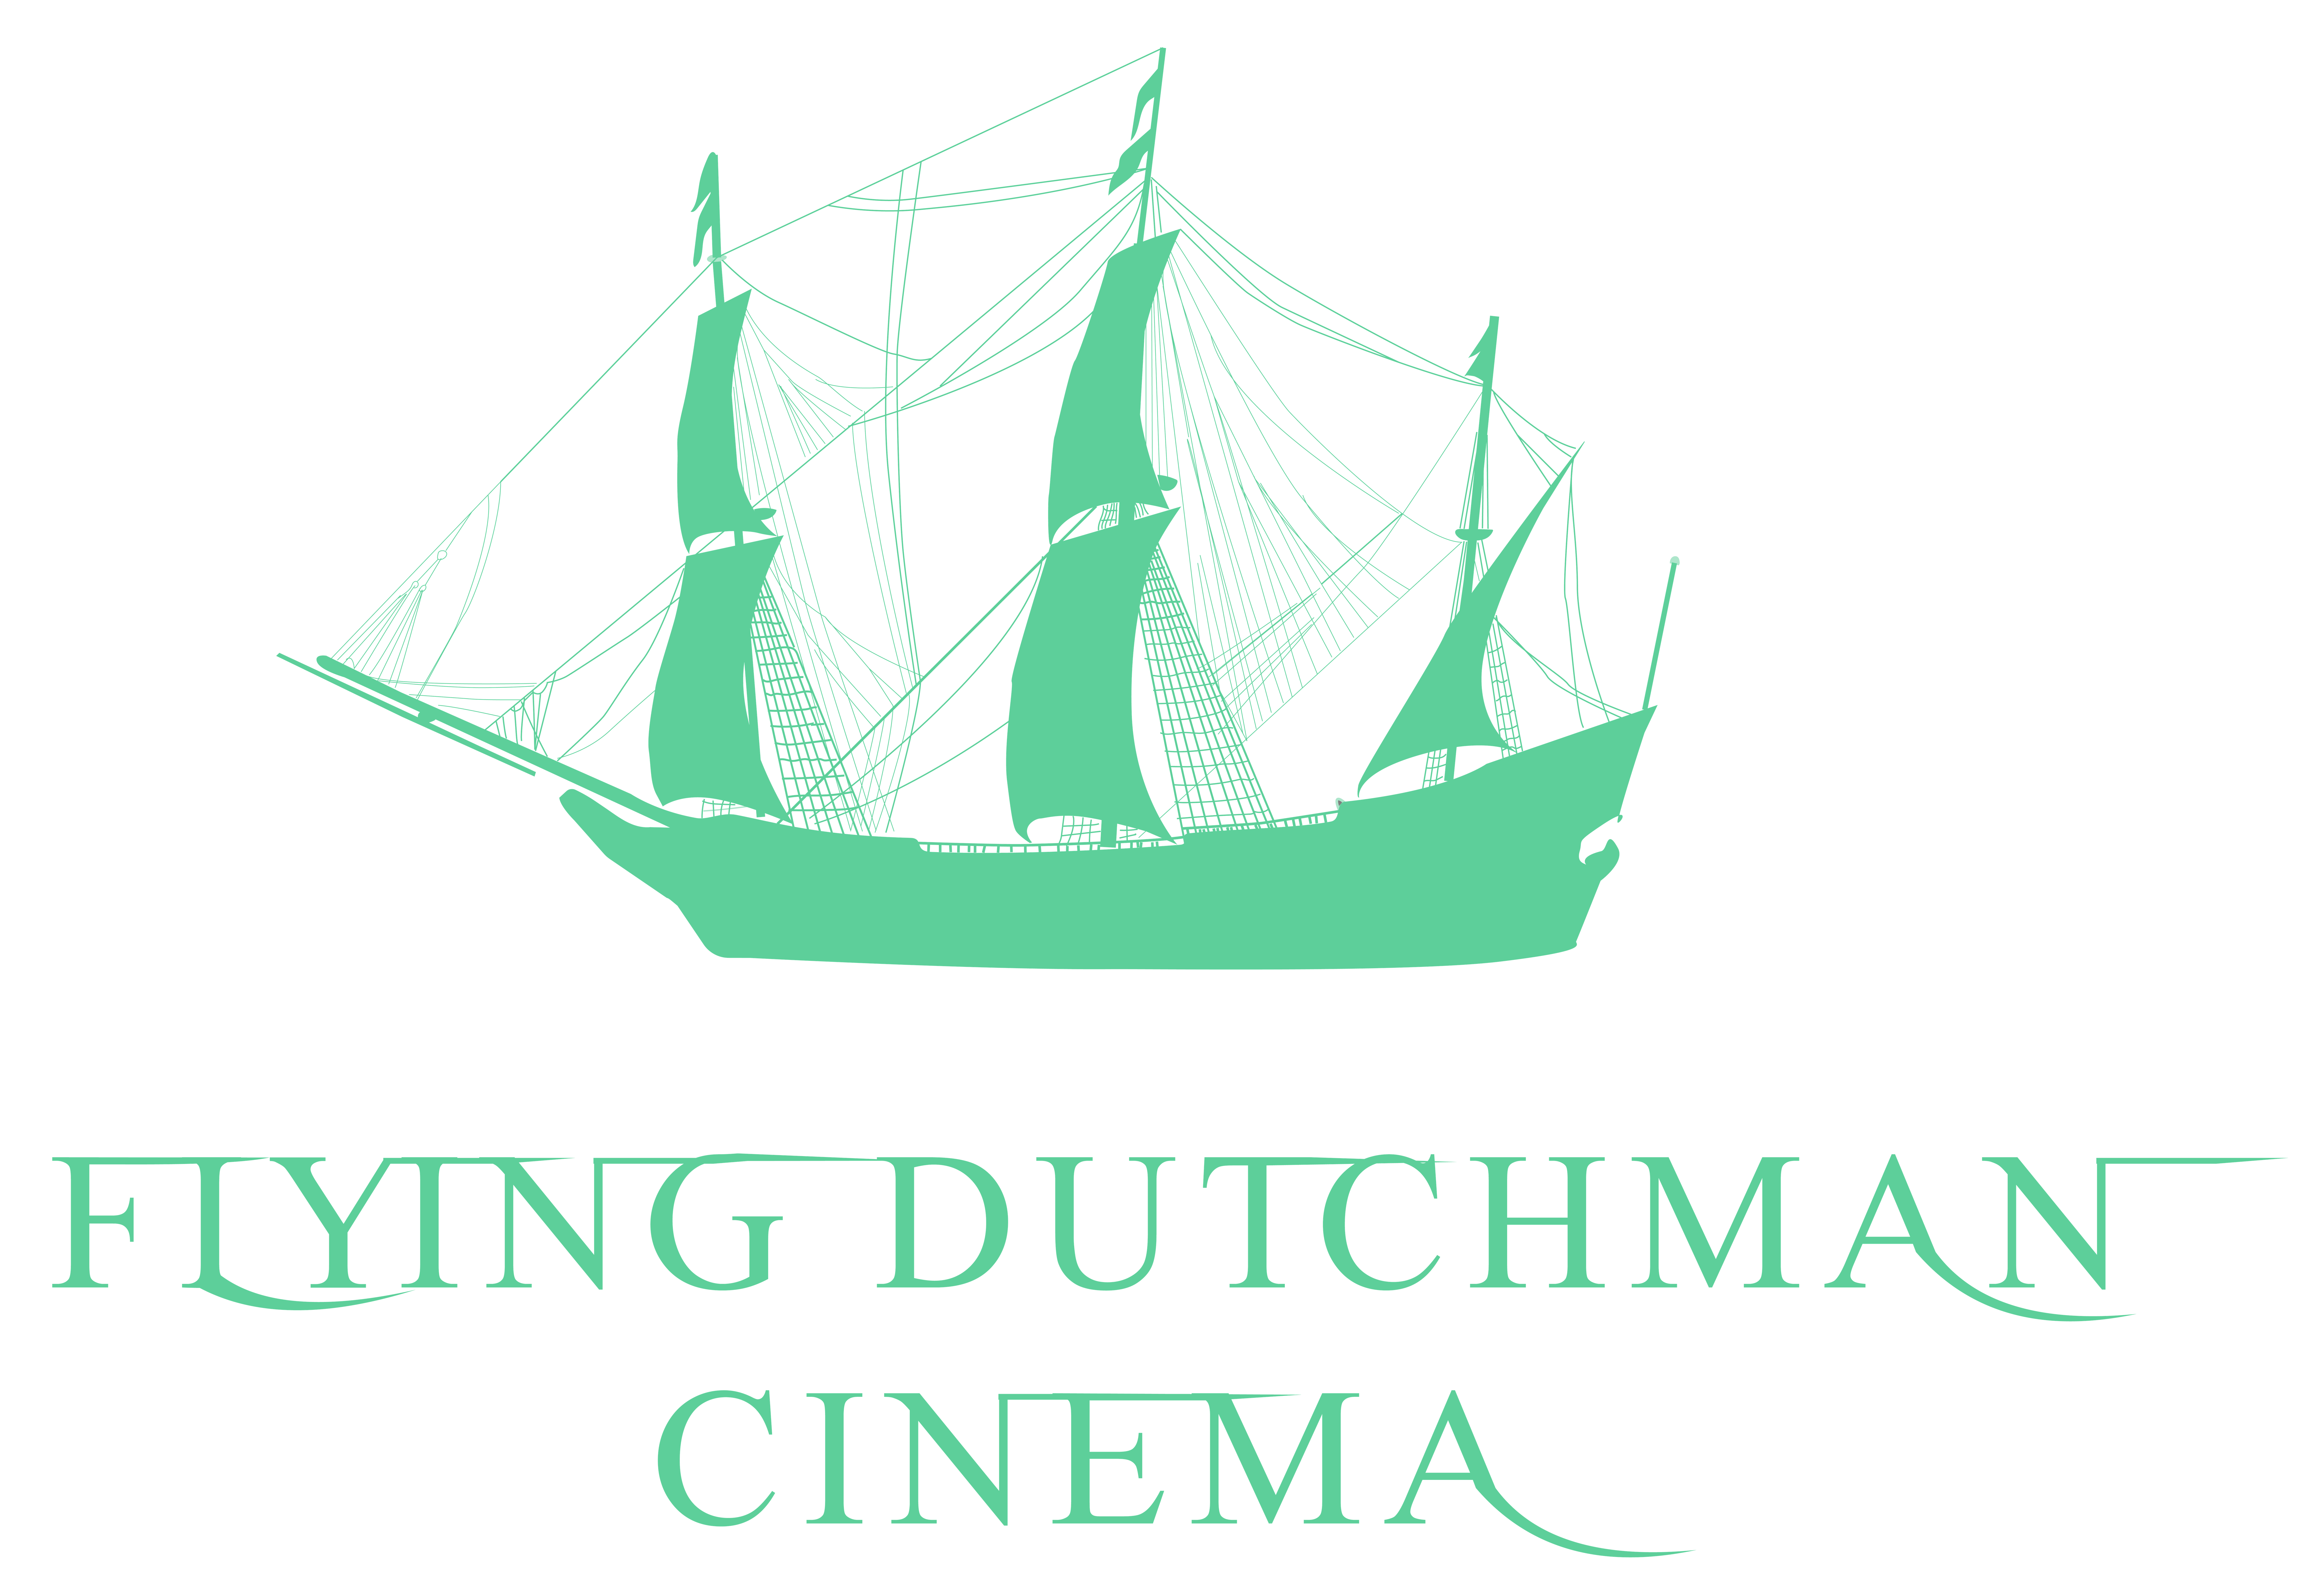 Flying-Dutchman-Cinema